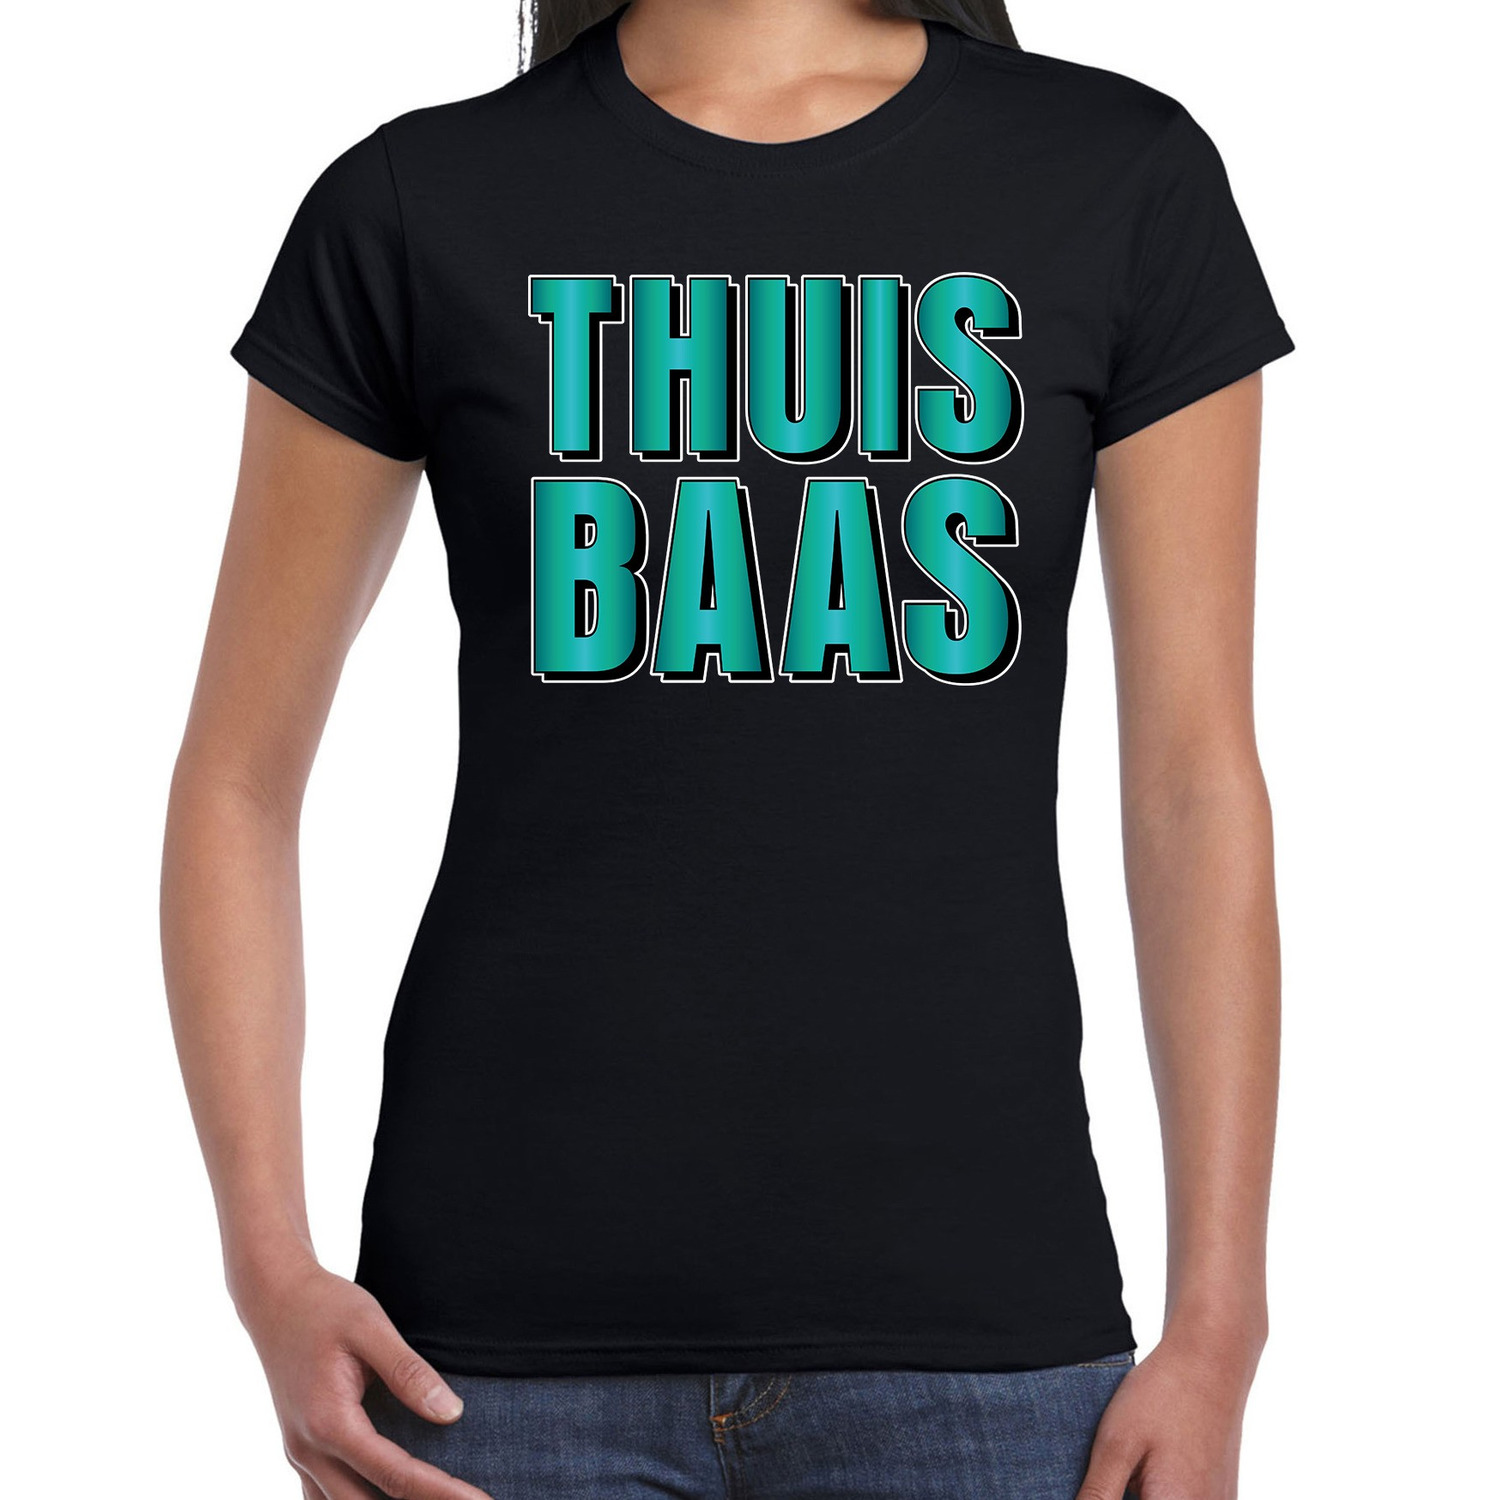 Thuis baas t-shirt zwart met blauwe-groene letters voor dames